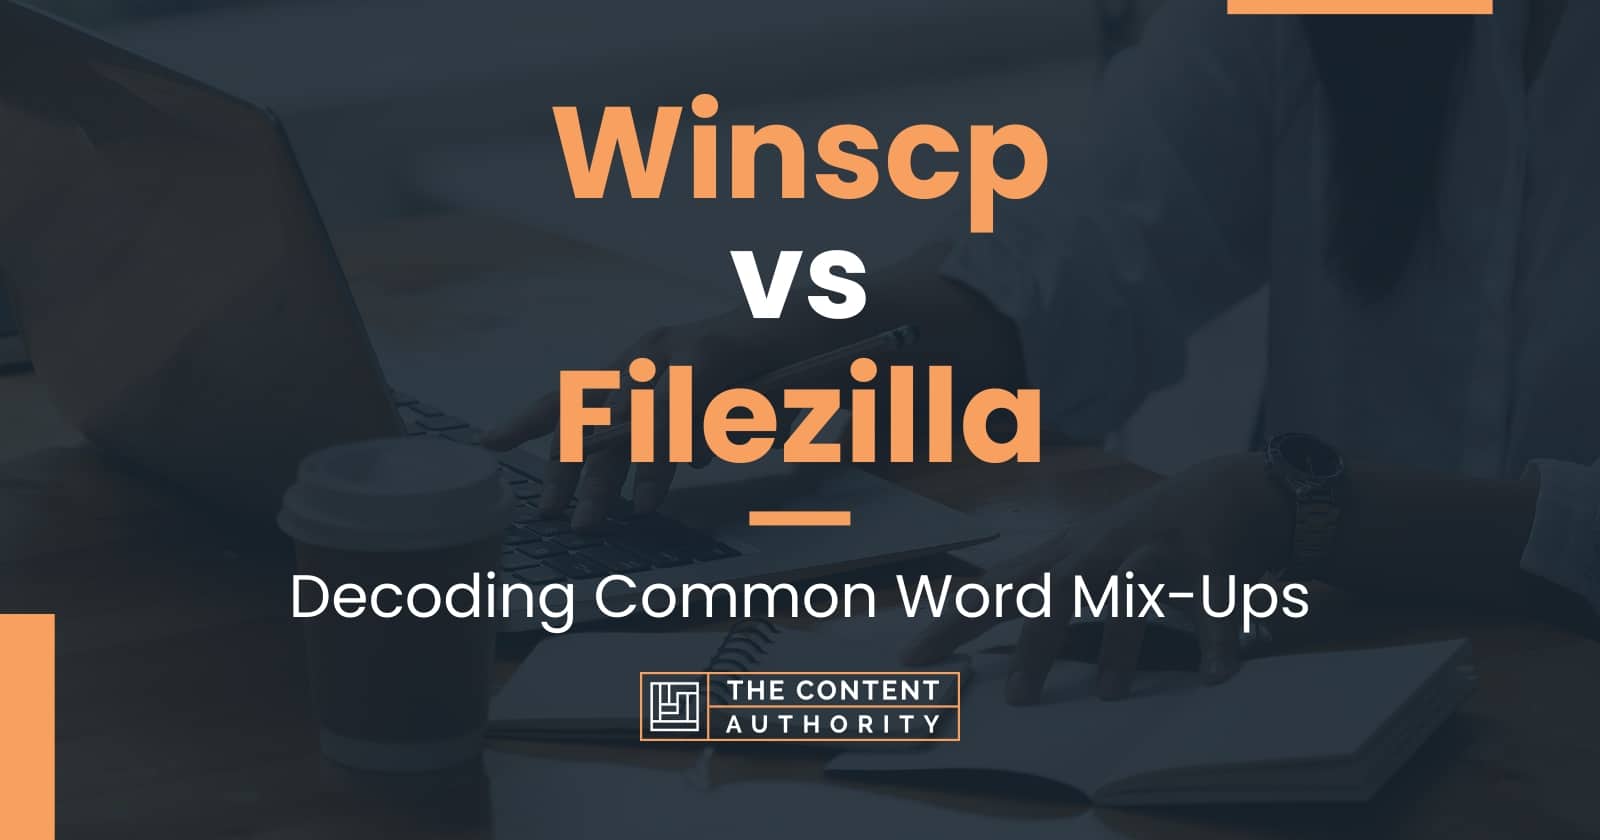 ftp server winscp vs filezilla